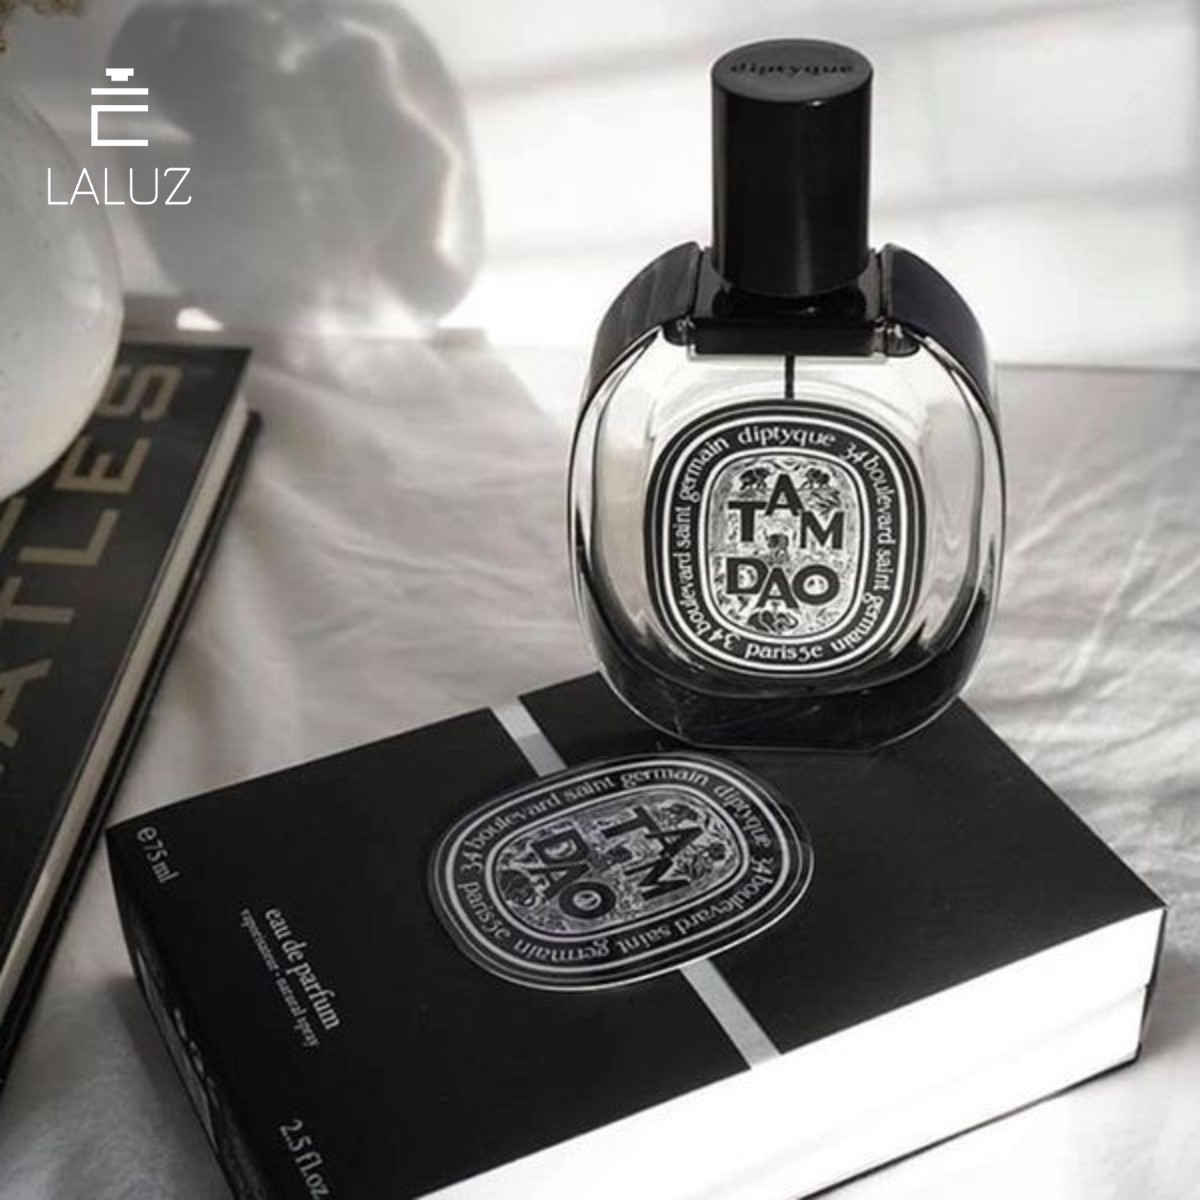 Diptyque Tam Dao perfume màu đen quyến rũ